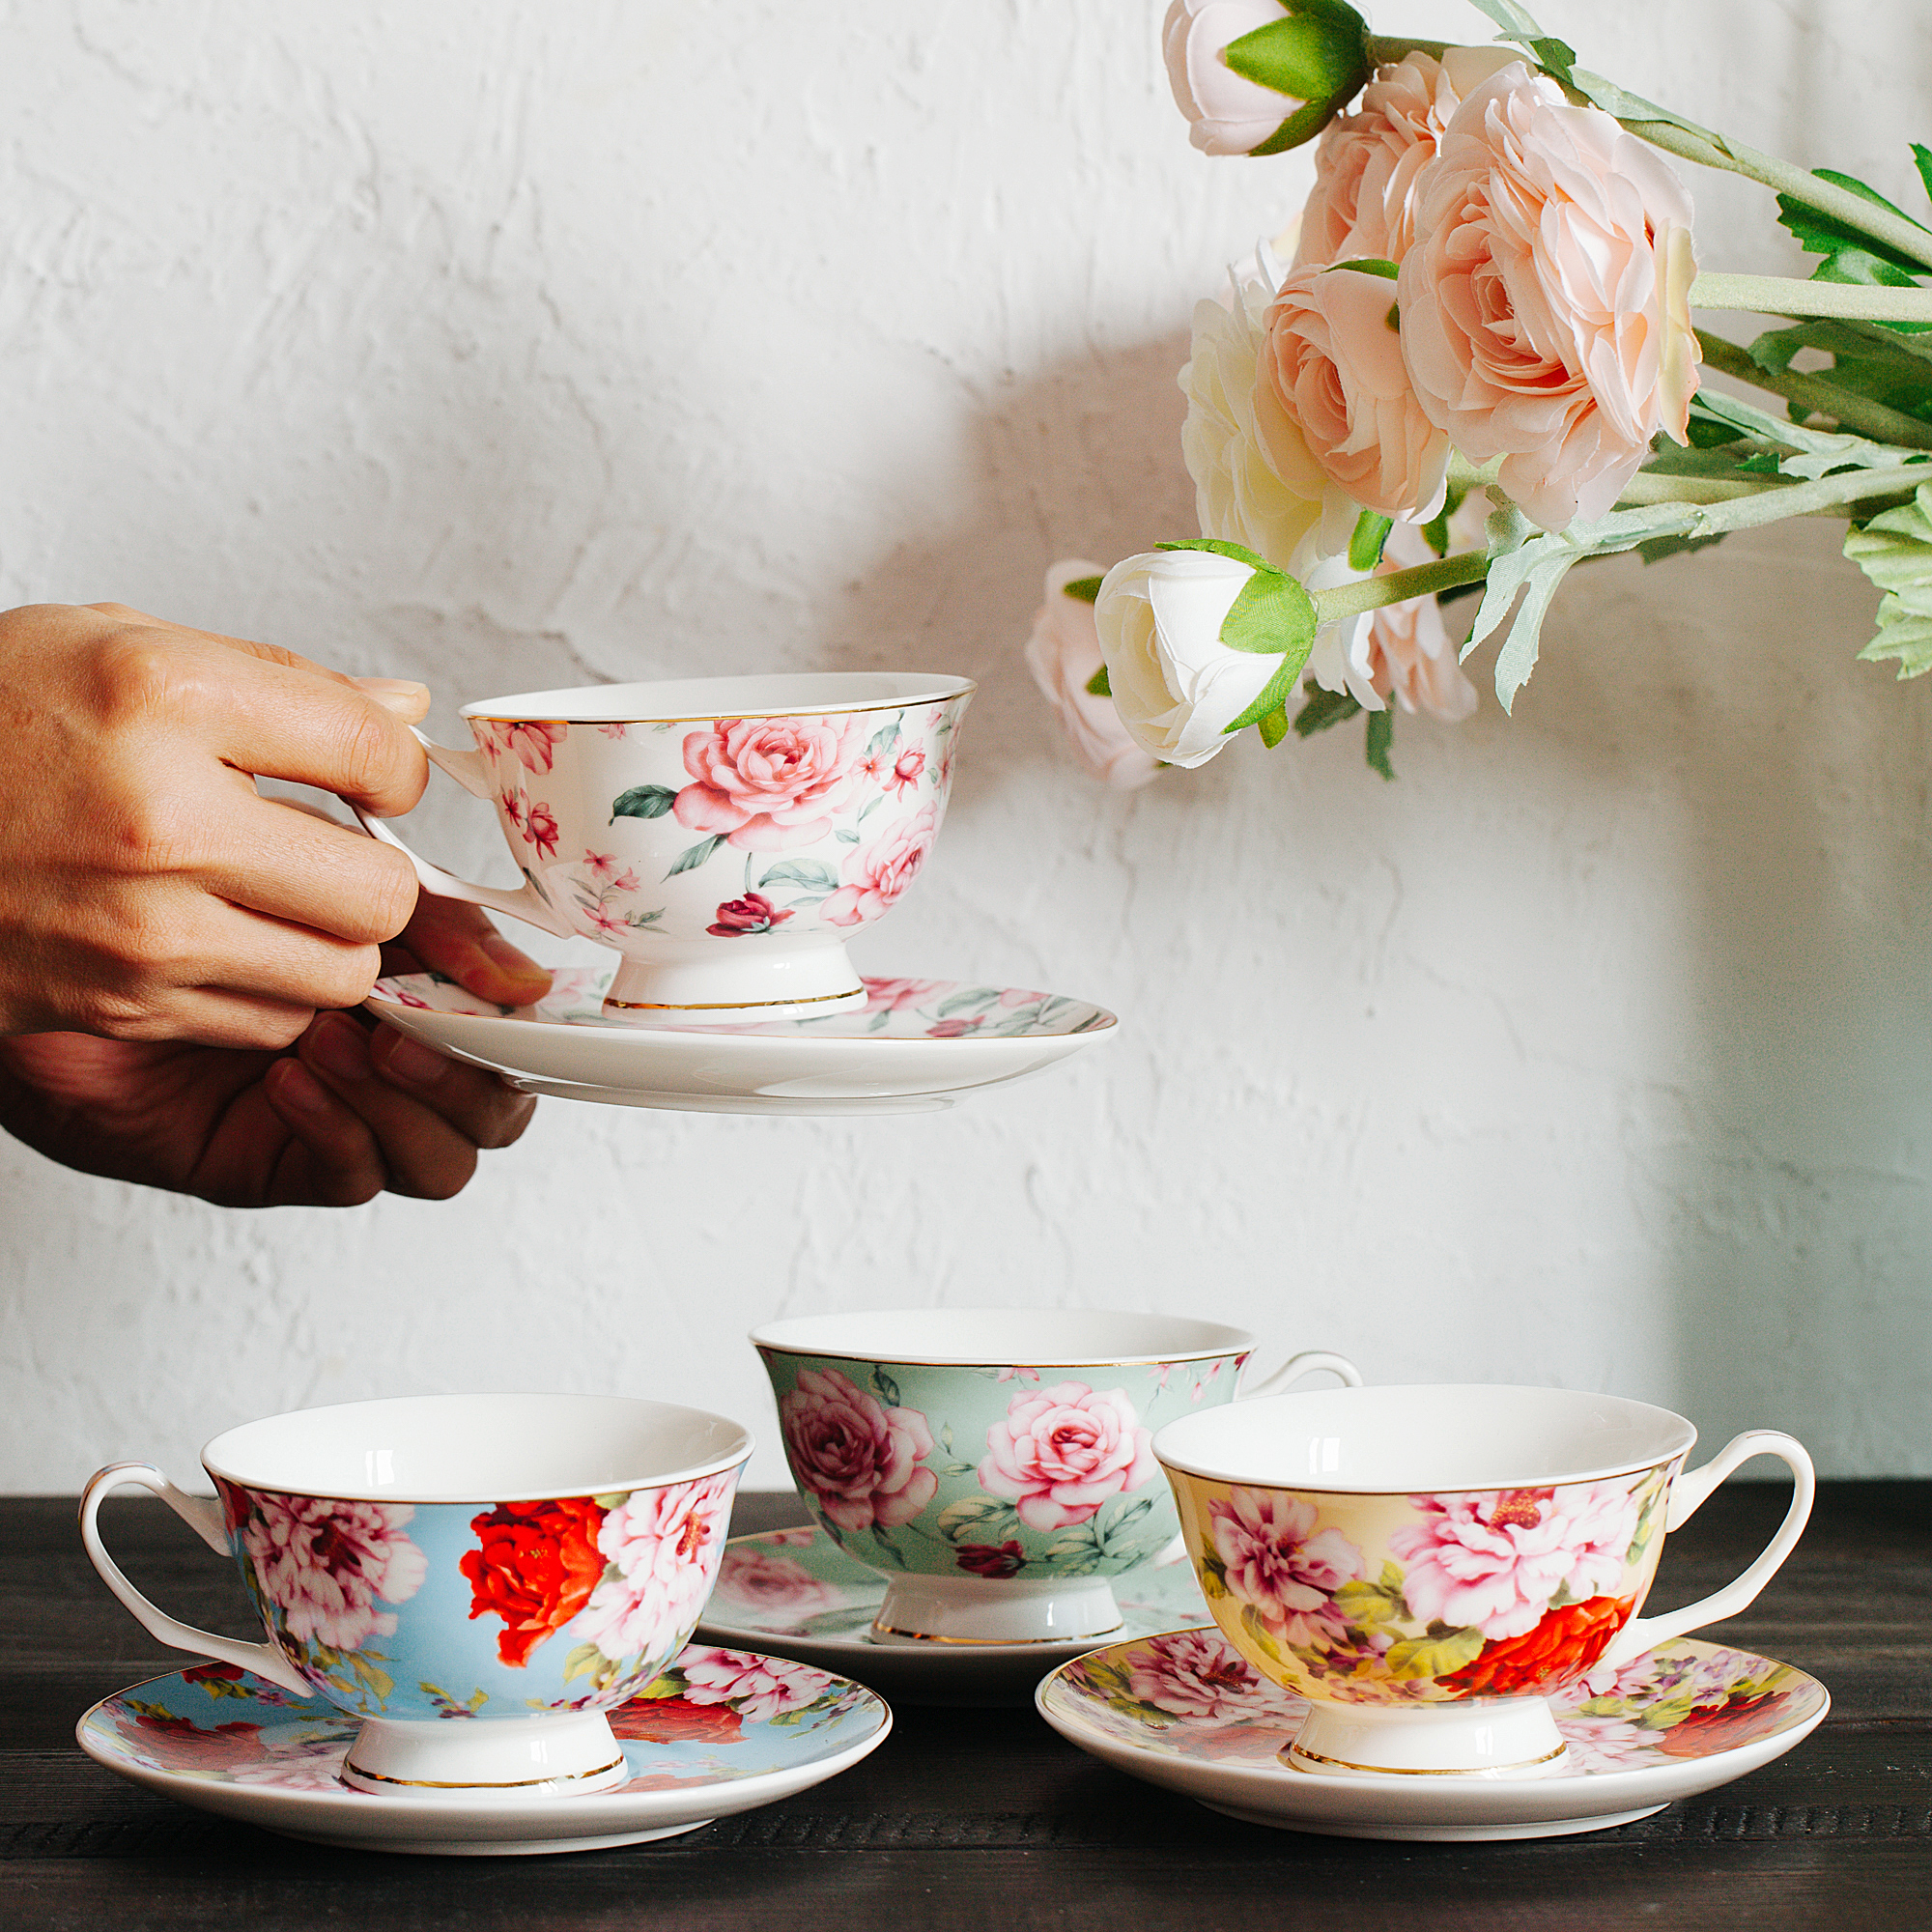 BTäT- Floral Tea Cups and Saucers (Pink - 8 oz)